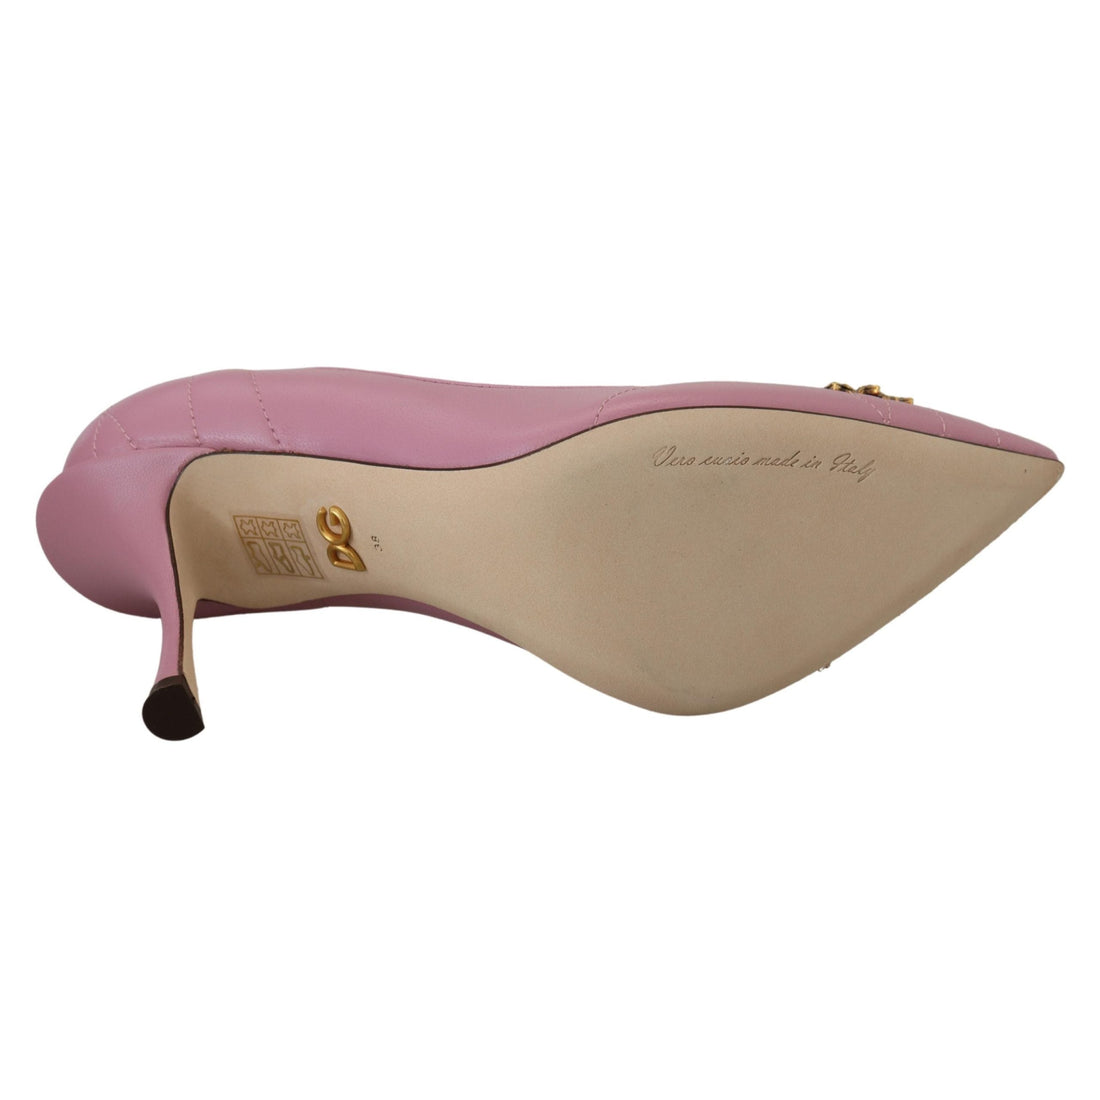 Dolce & Gabbana Devotion Leather Heels in Pink